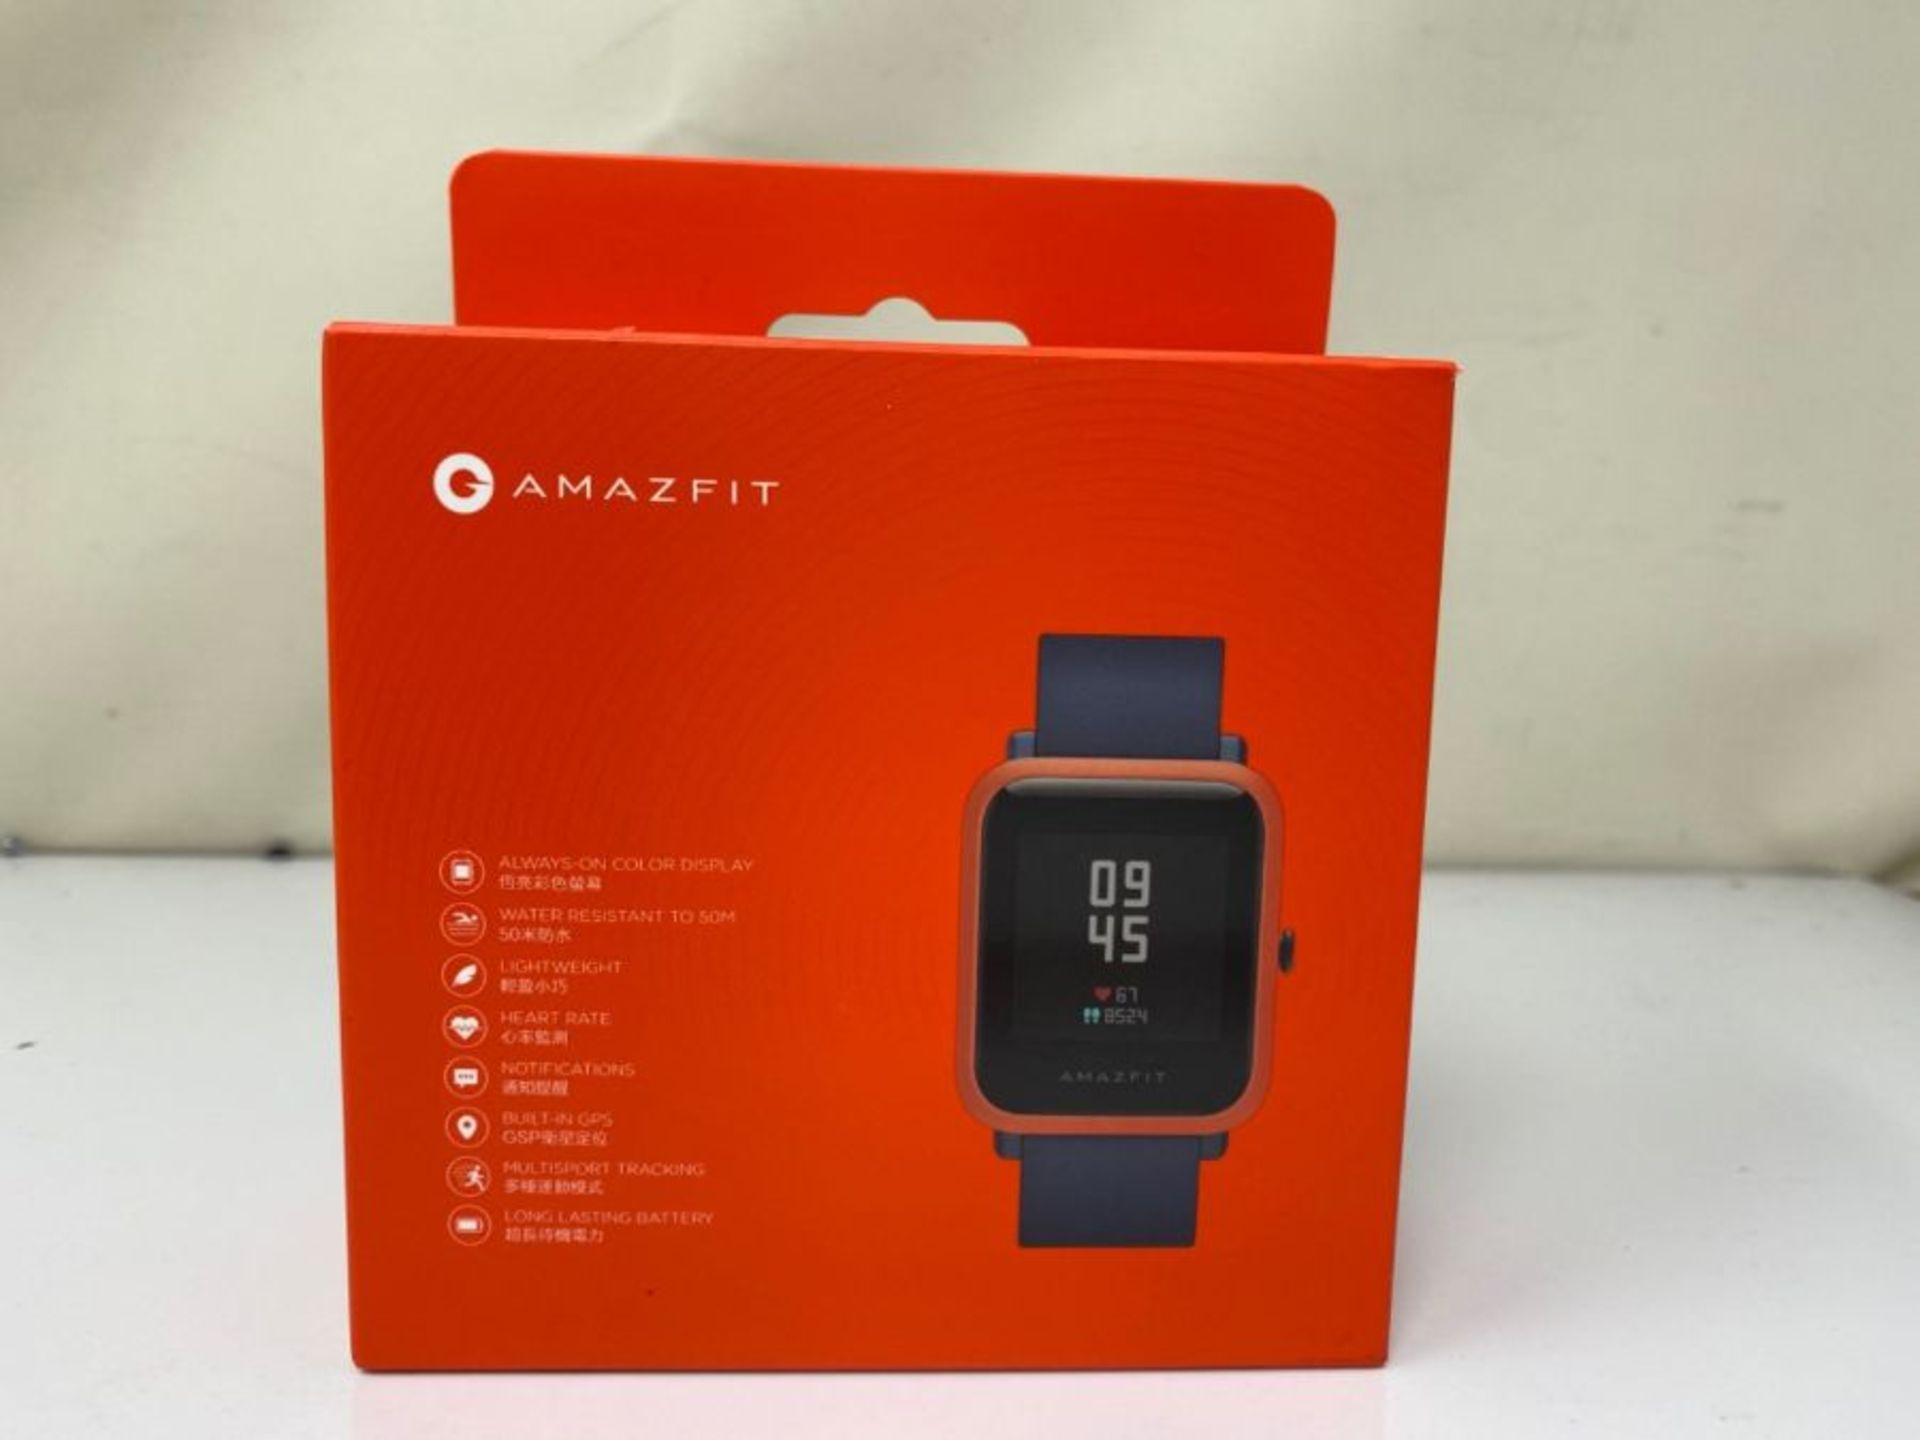 Amazfit Bip S - Smartwatch Red Orange - Image 2 of 3